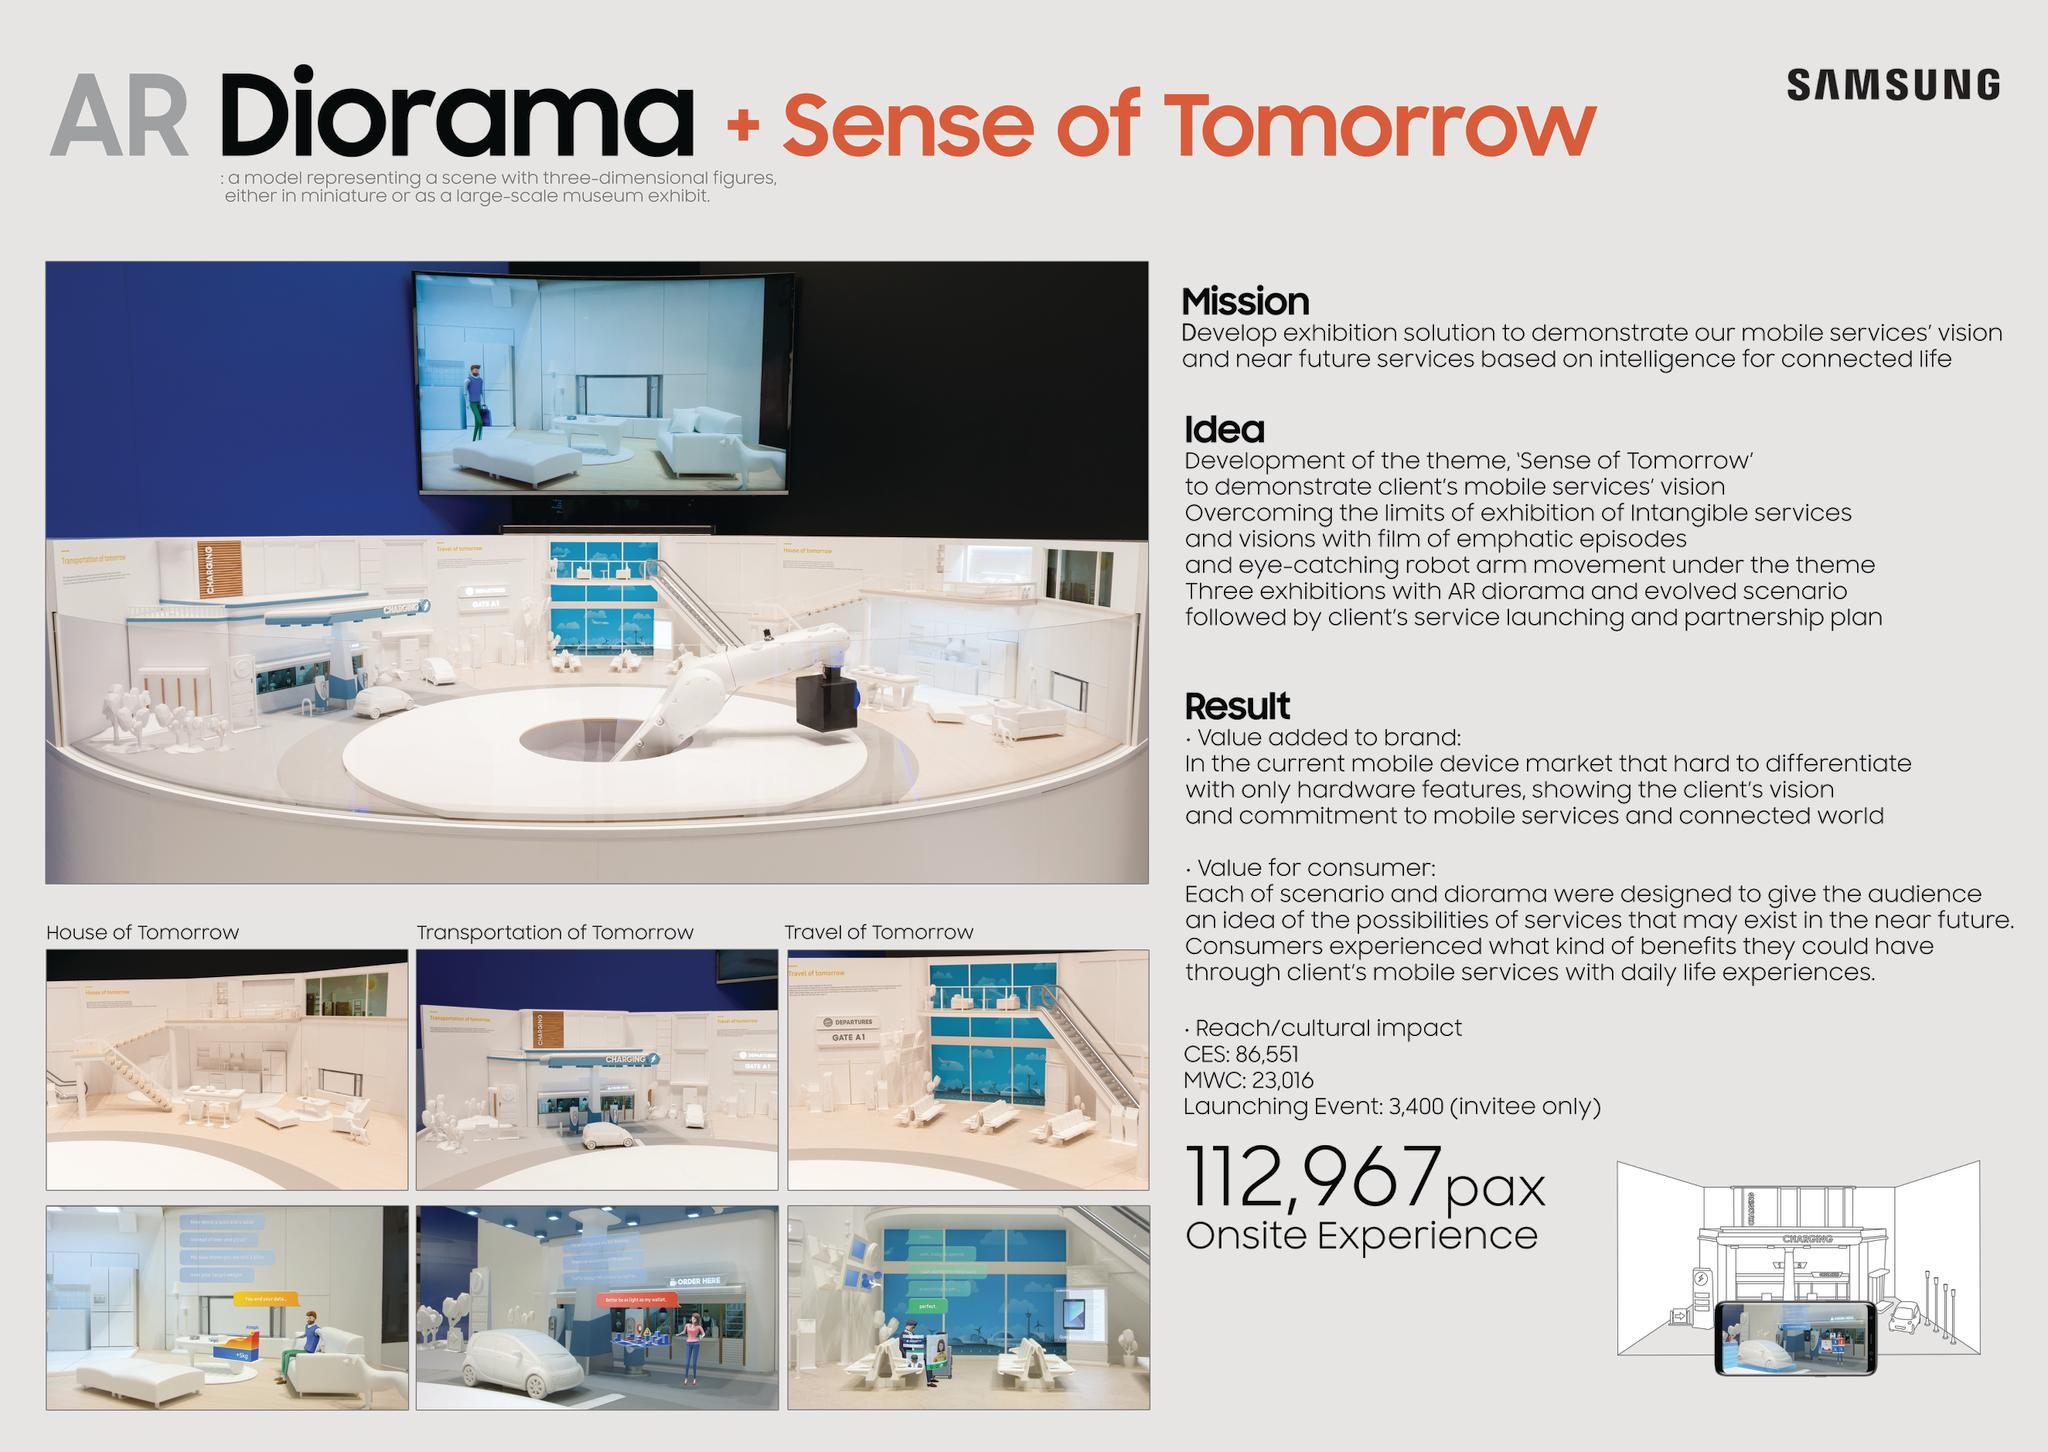 AR Diorama+Sense of tomorrow